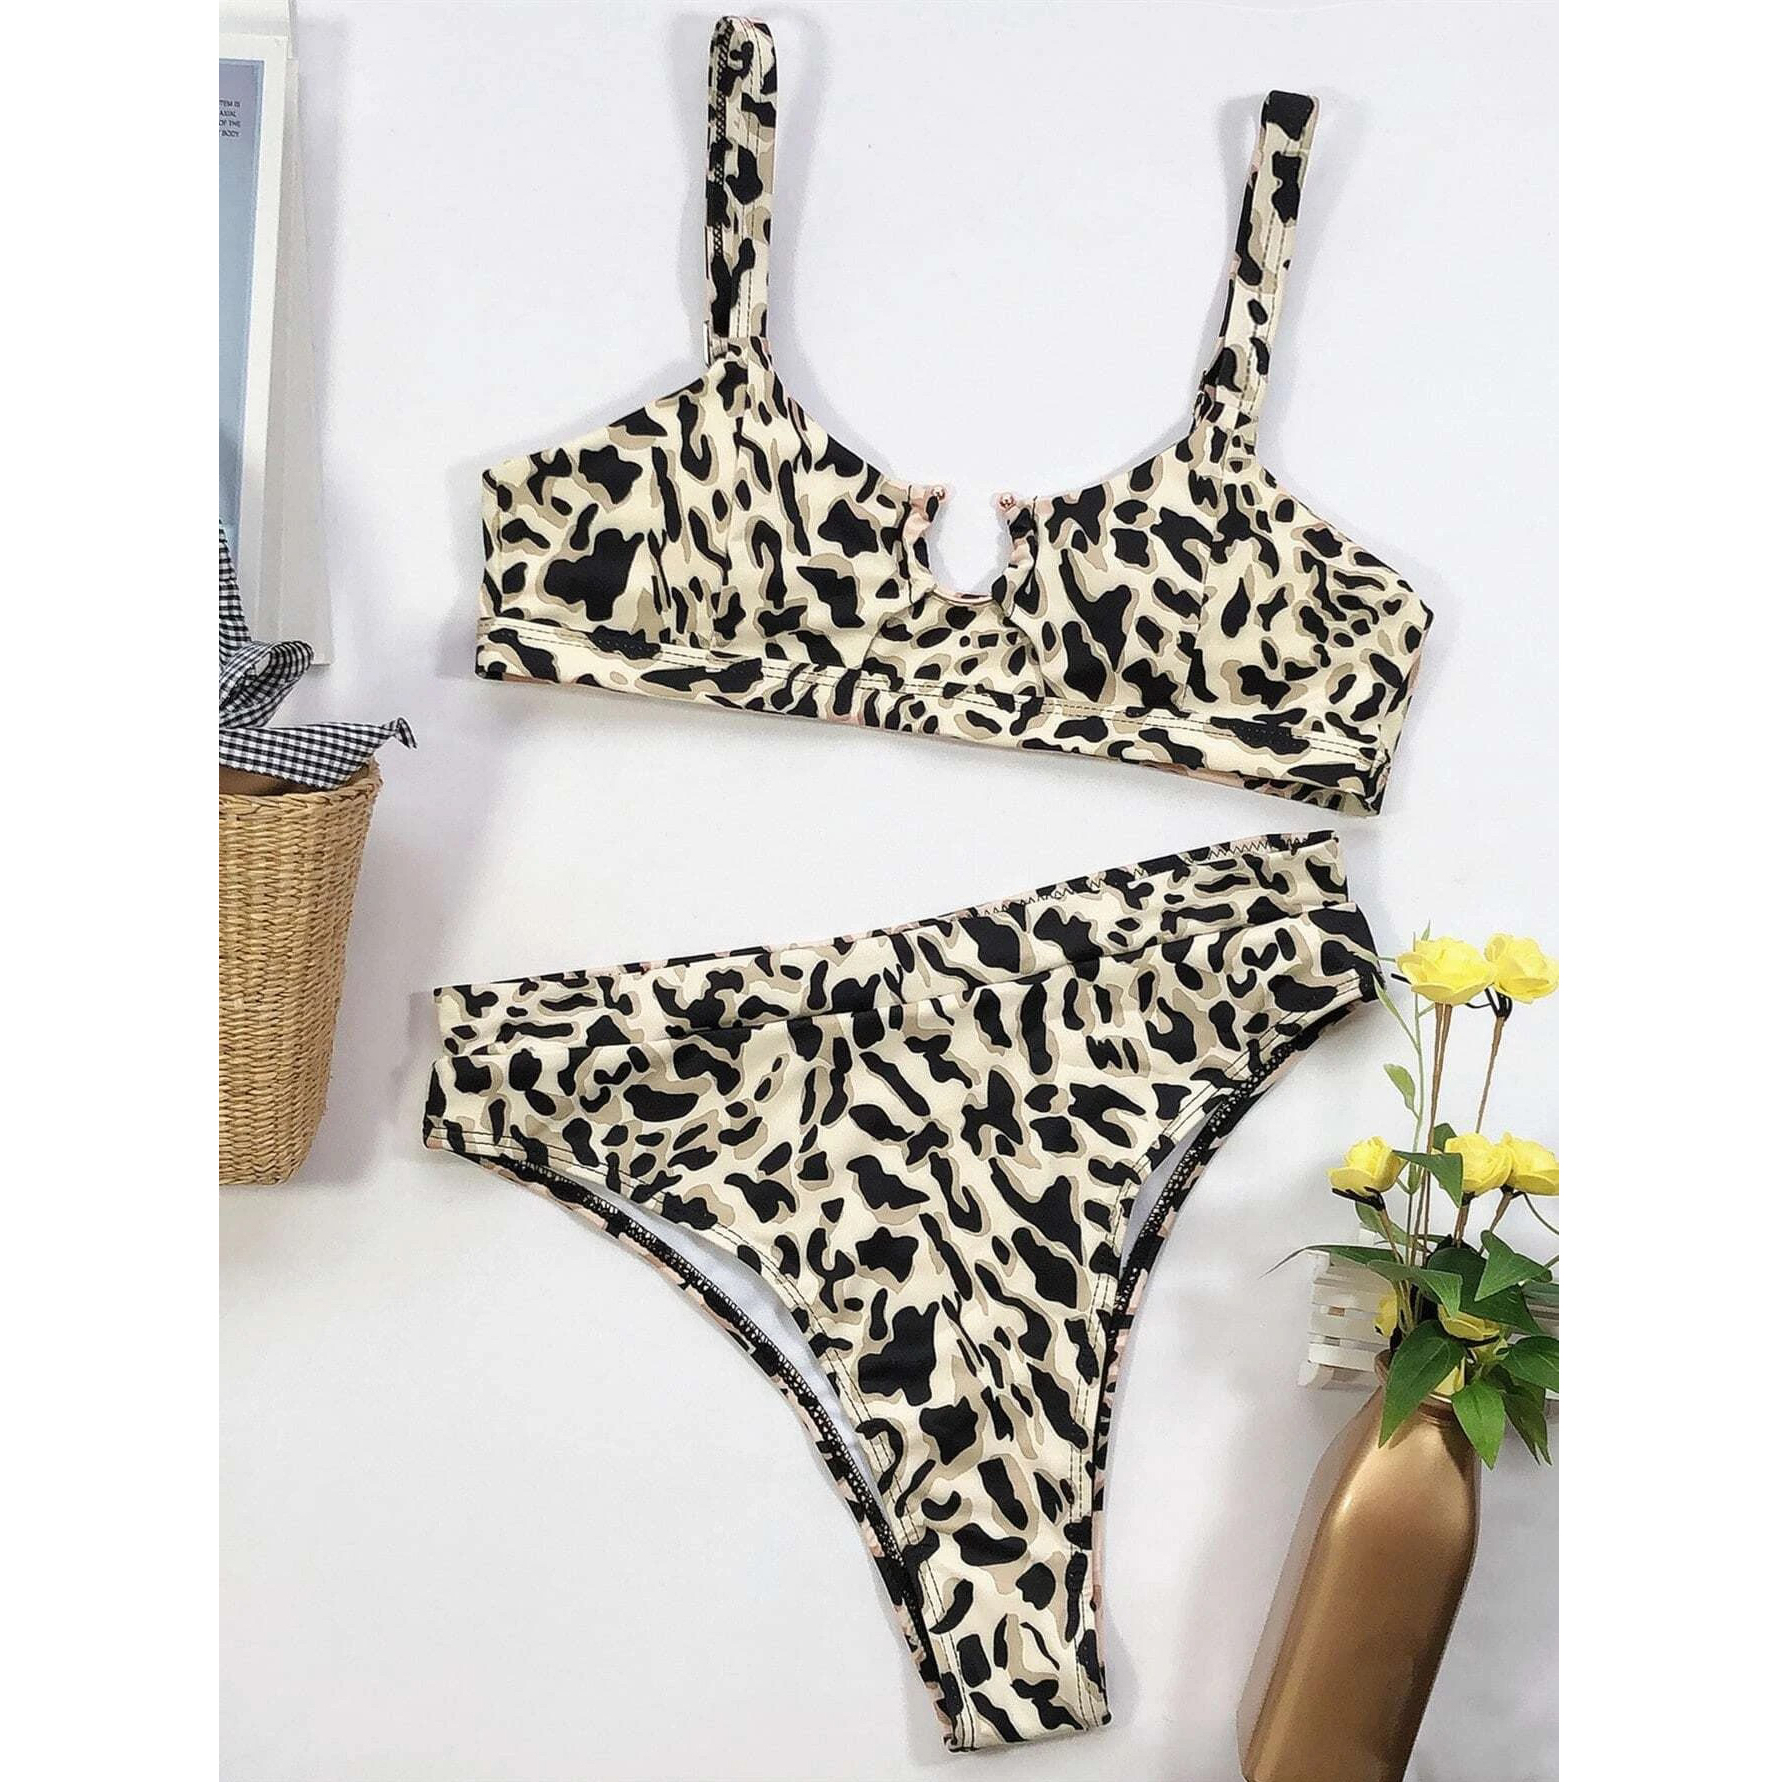 Leopard High Waisted Bikini Swimsuit - M